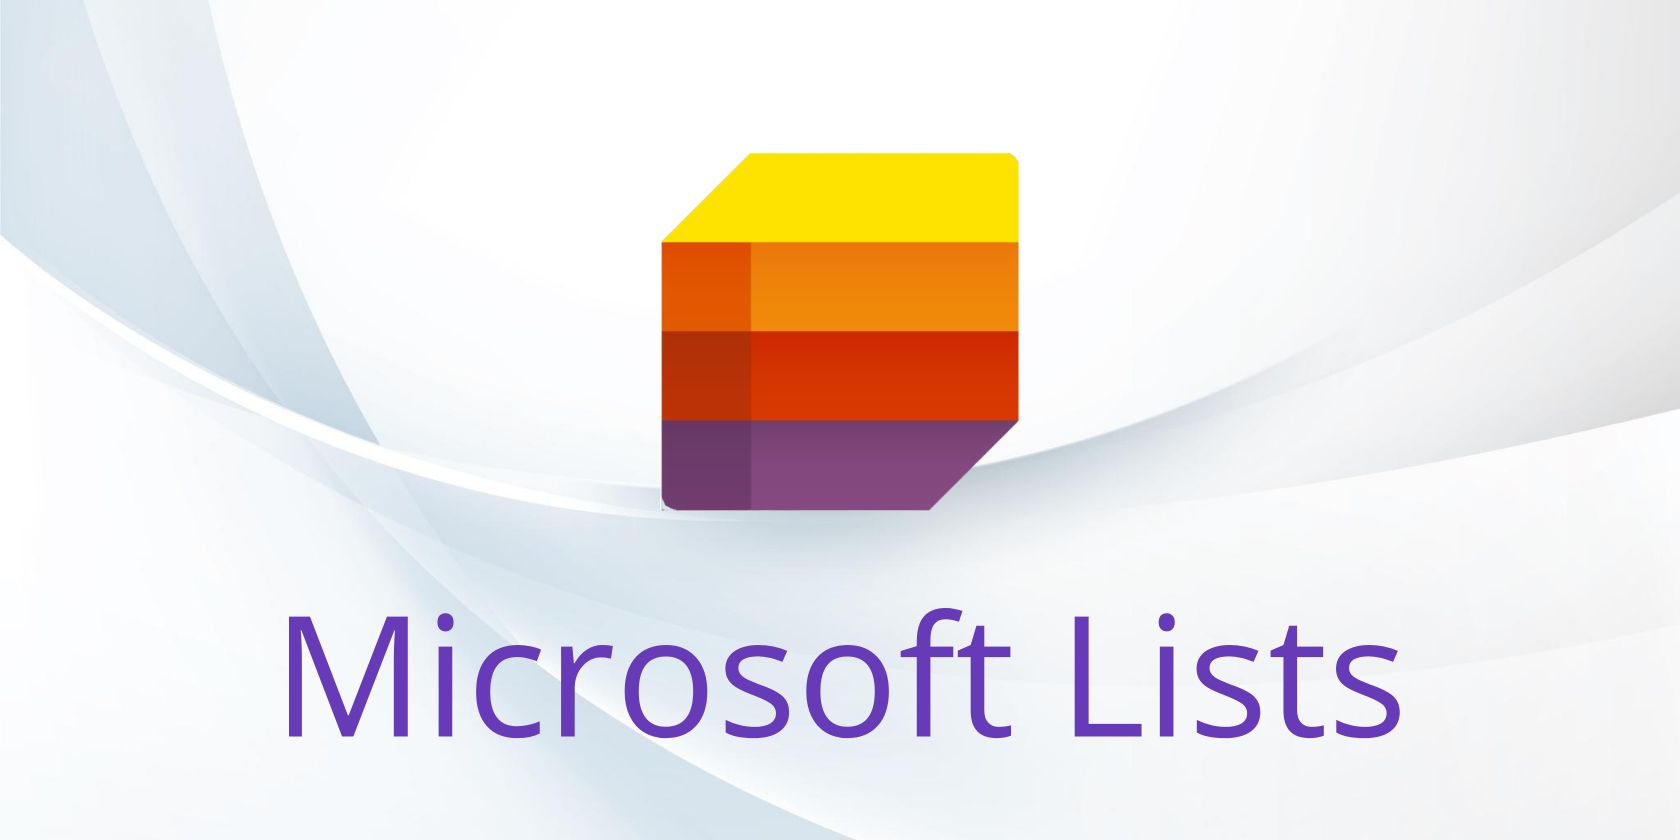 Visualization of Microsoft Lists logo